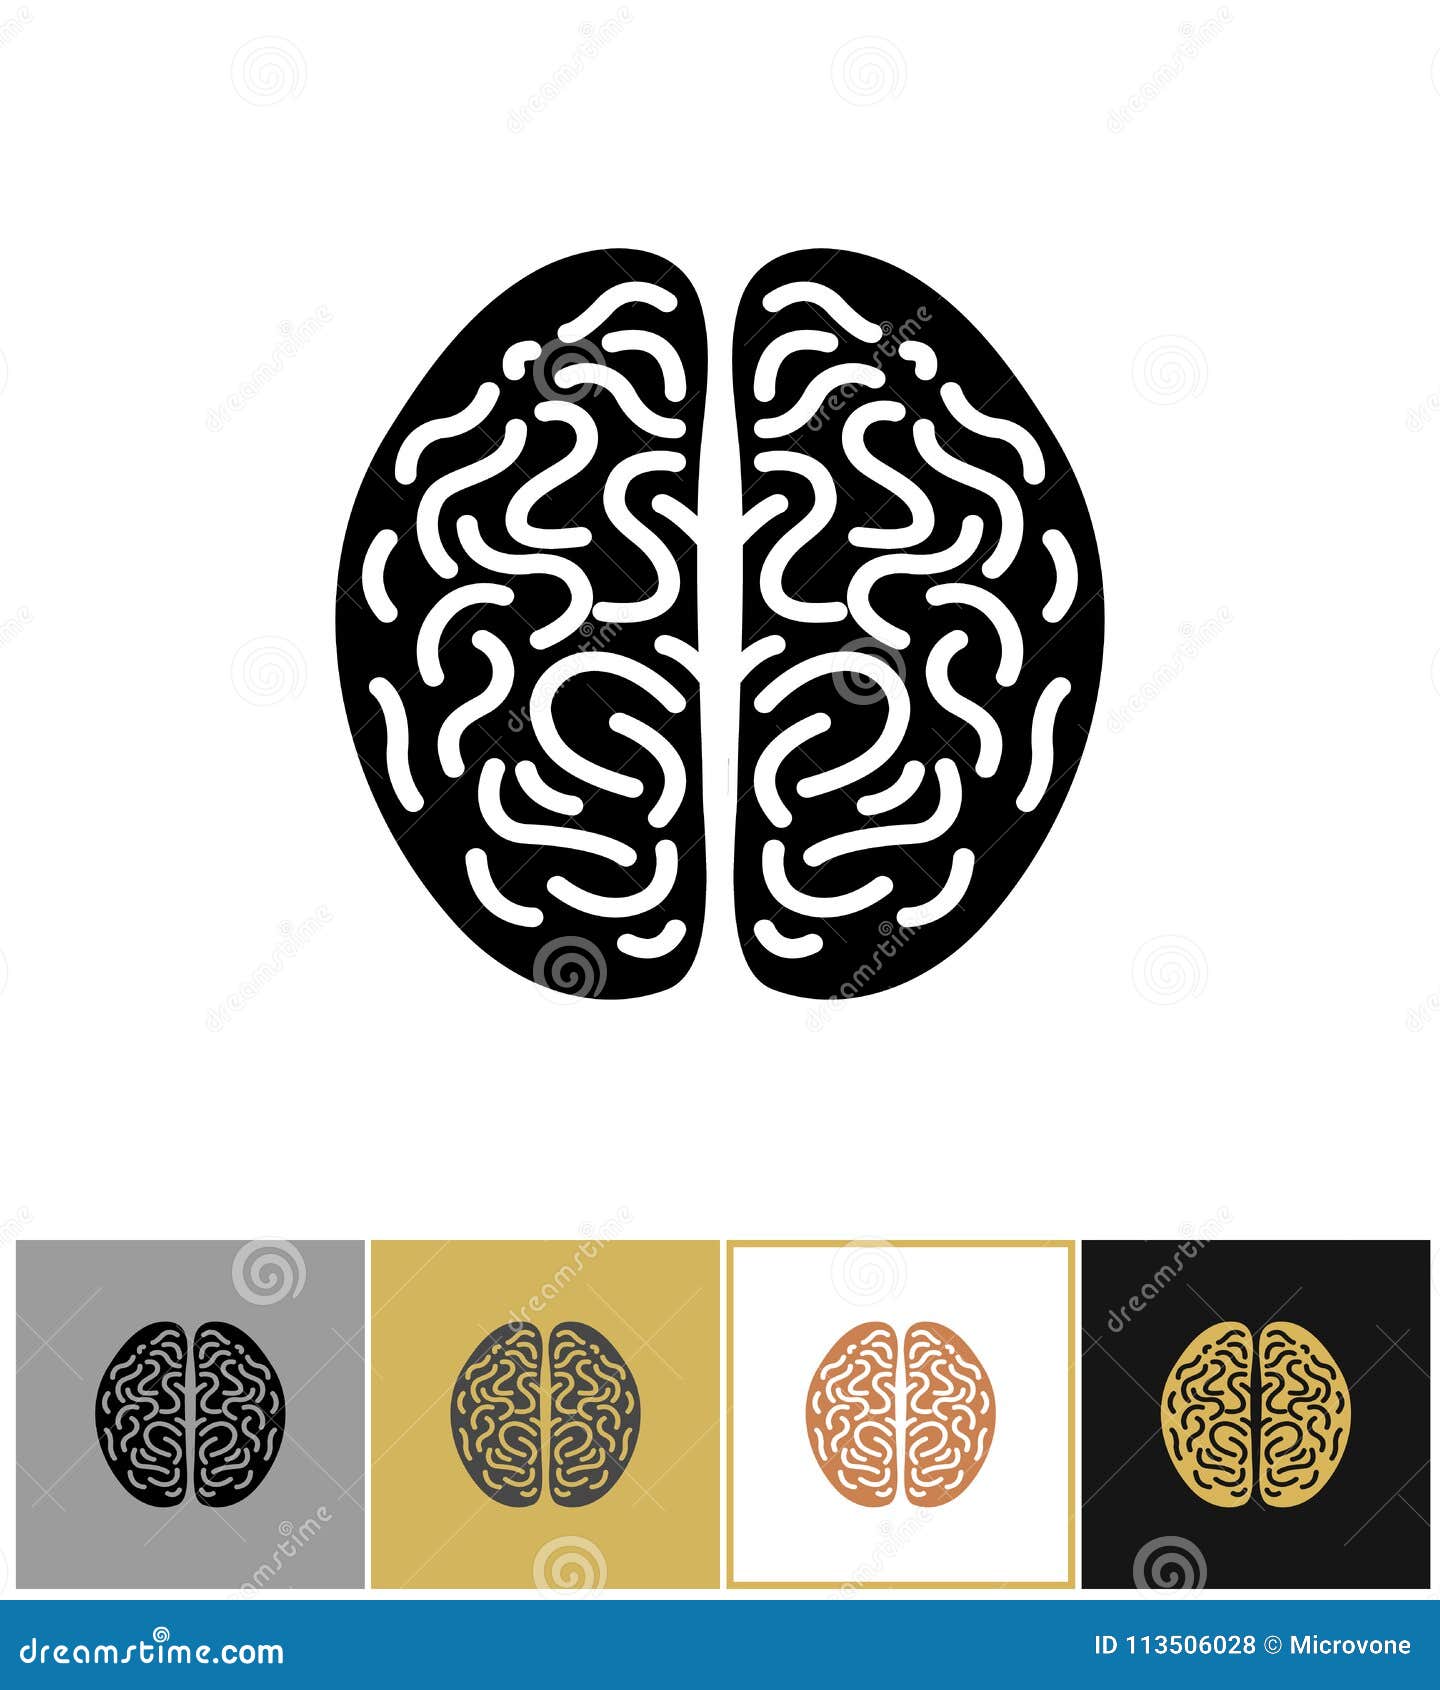 brain icon, intelligence sign